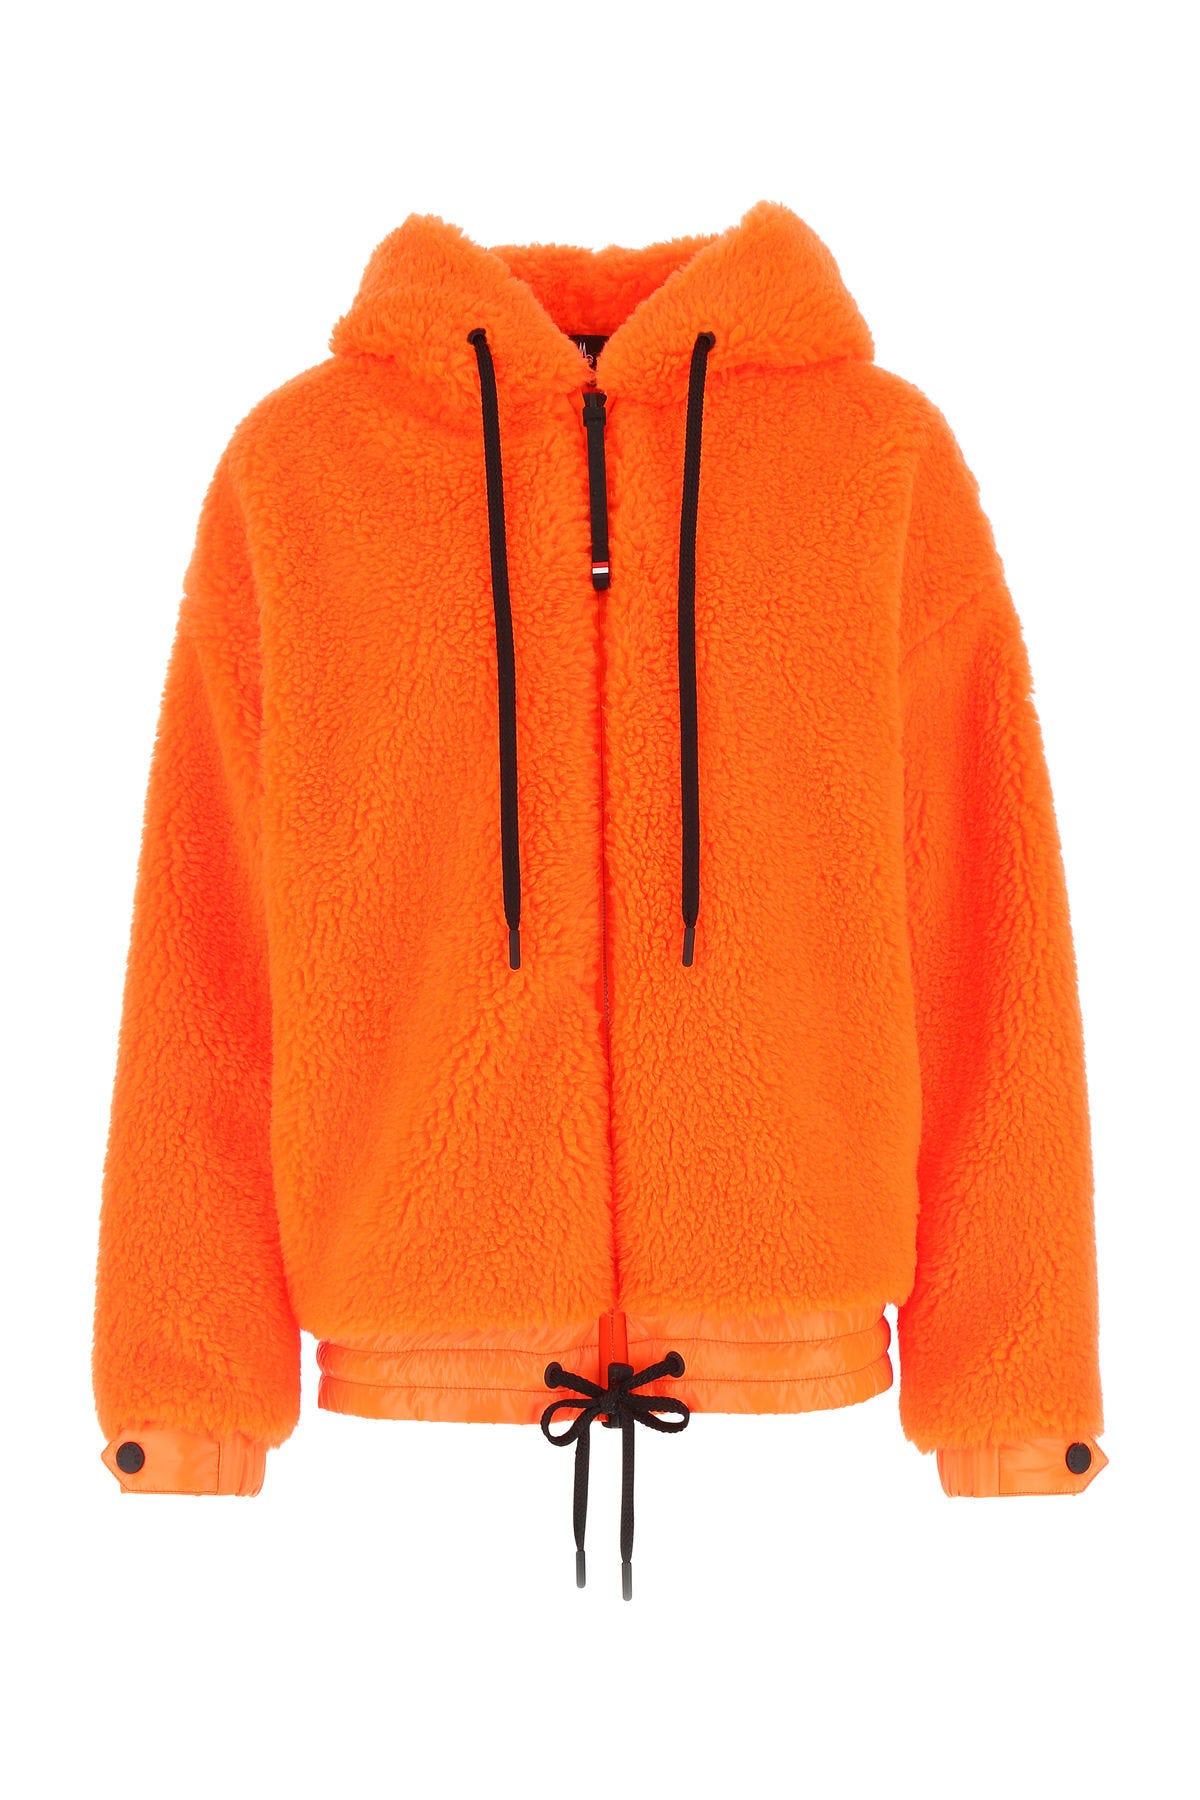 Moncler Fluo Orange Teddy Oversize Jacket